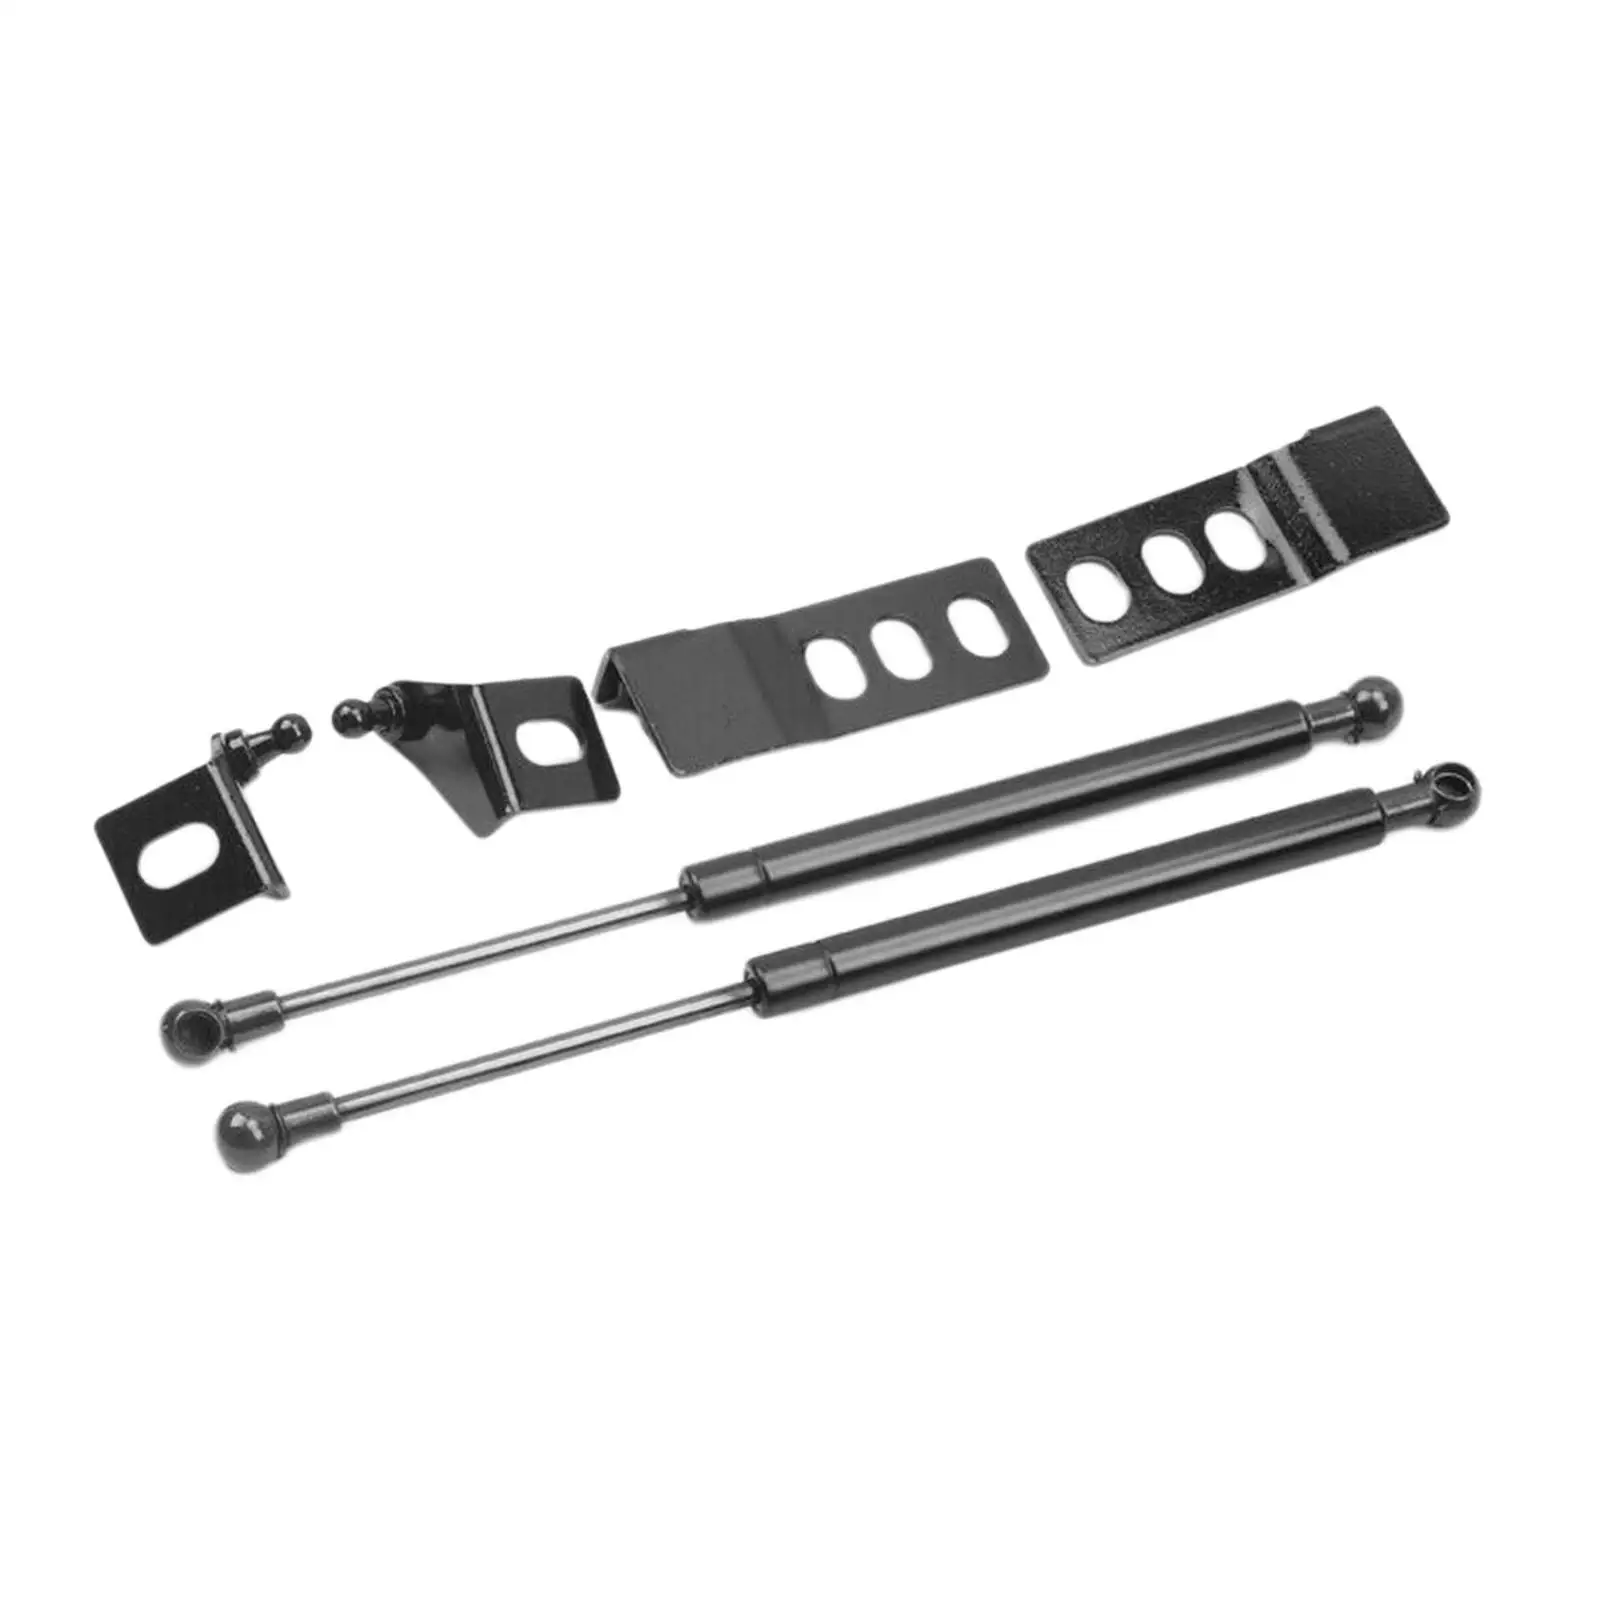 

Hood Engine Hydraulic Rod Strut Spring Shock Bar Moulding Accessories Supplies Kit for Rav-4 19-21 2019 2020 2021